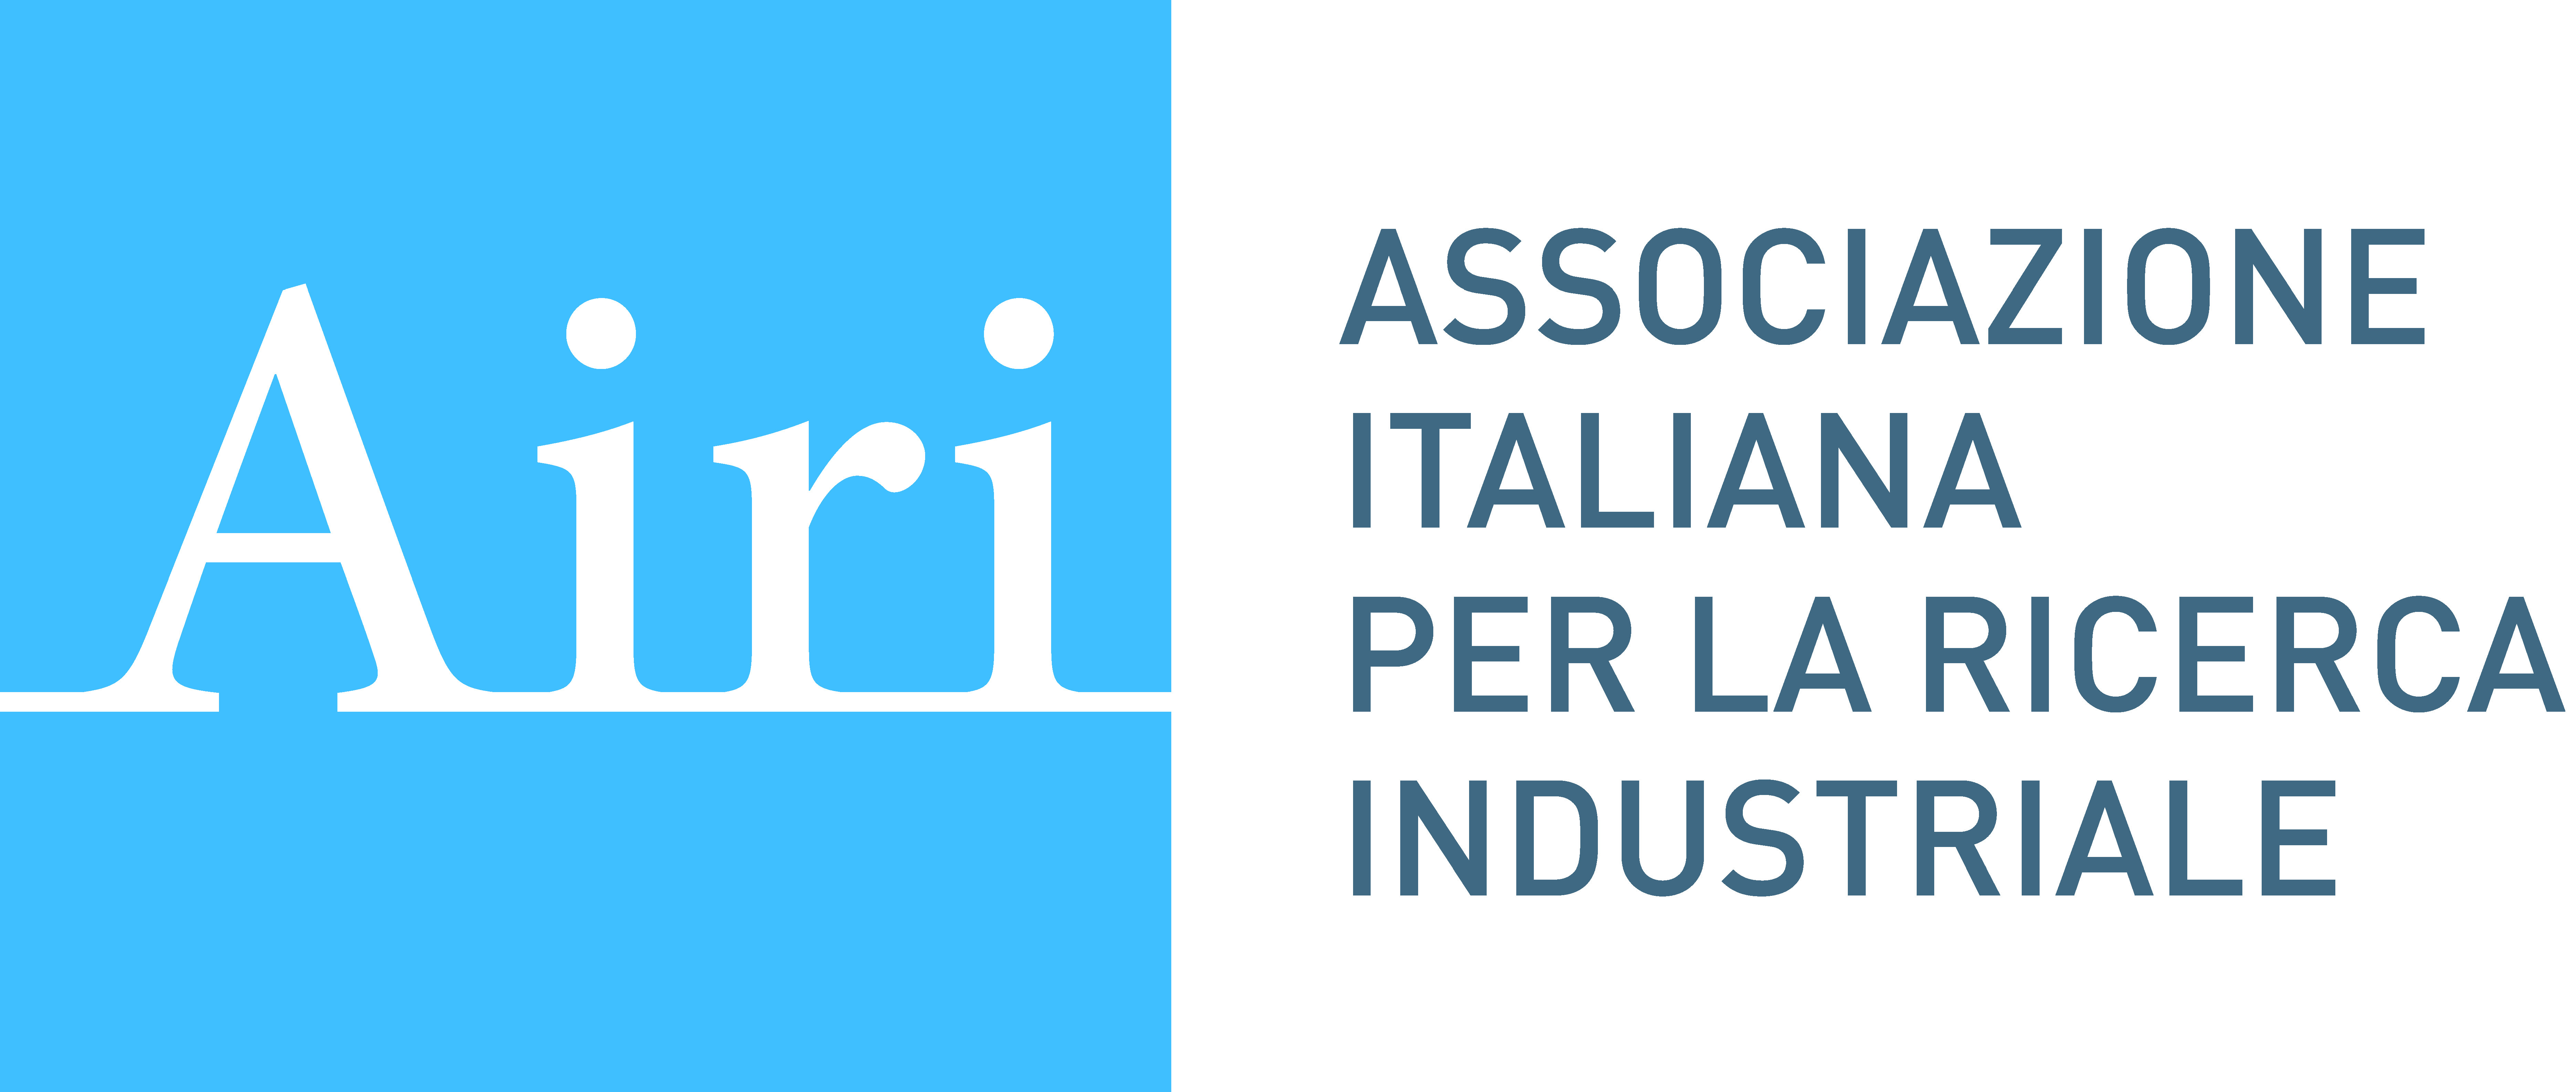 Italian Association for Industrial Research (Associazione Italiana Per La Ricerca Industriale) (AIRI)